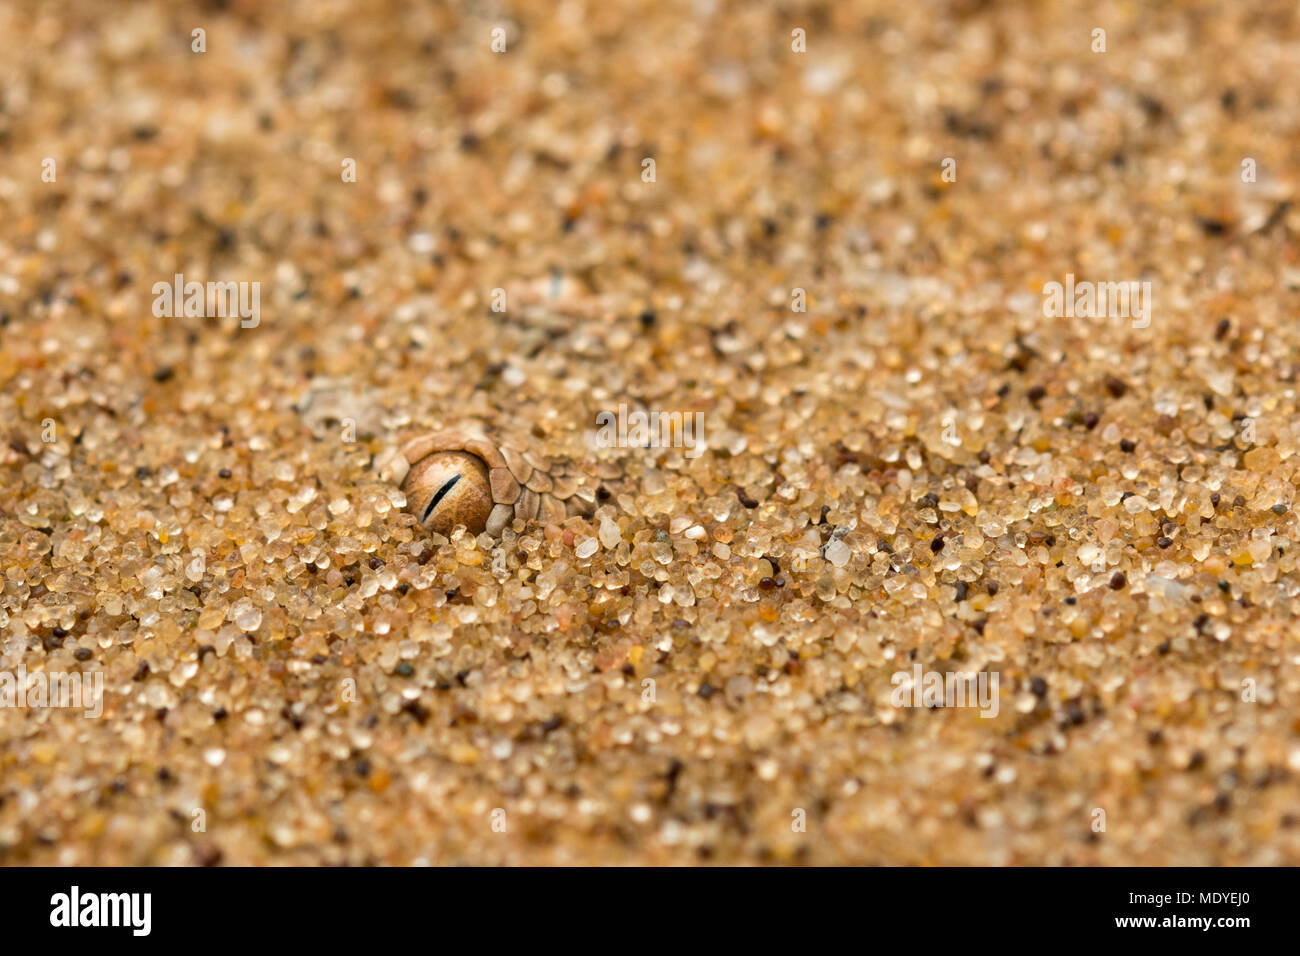 Close-up of a snake eye hidden in the desert sand Stock Photo